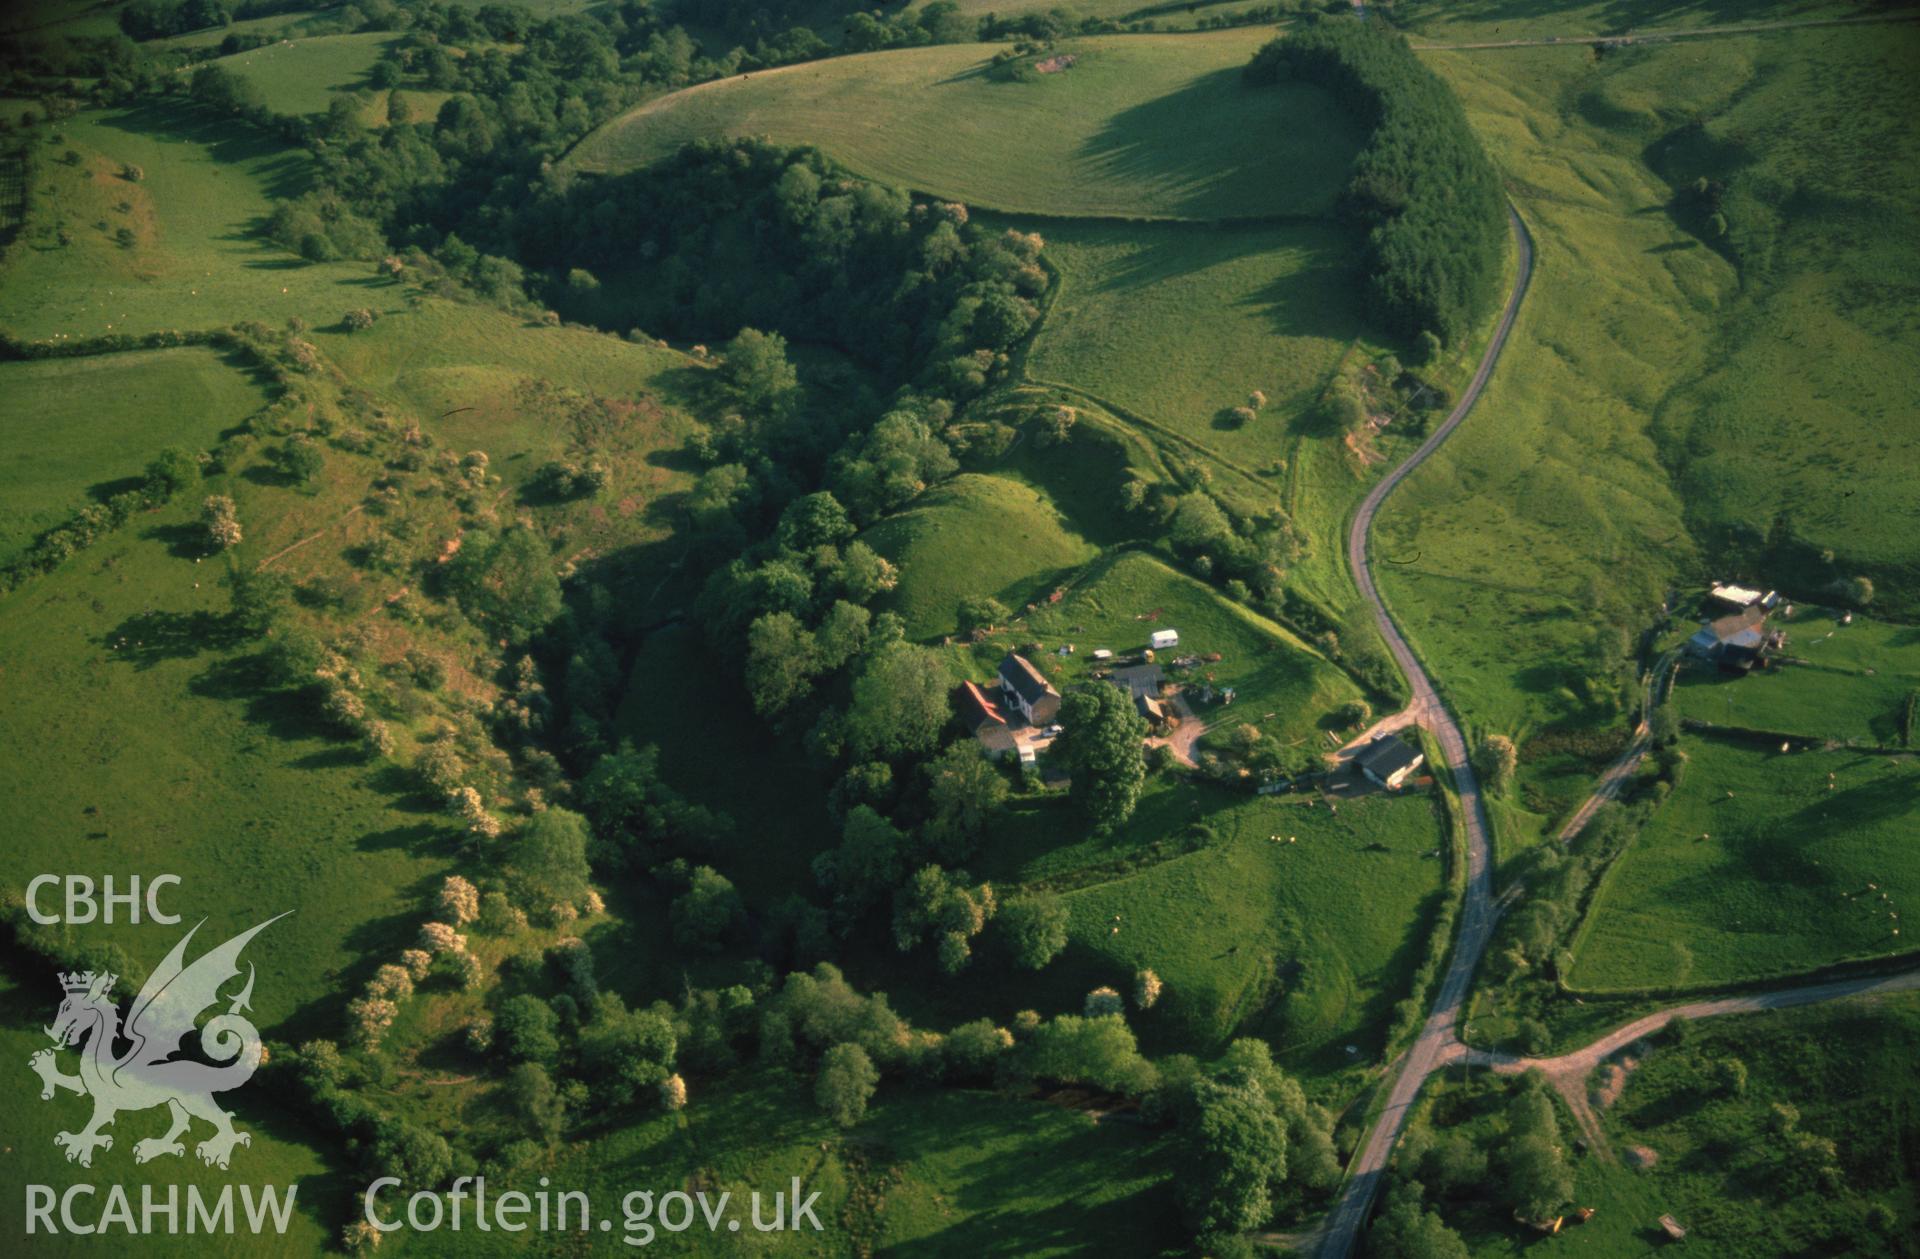 Slide of RCAHMW colour oblique aerial photograph of Castell Cwm Aran;castell Cymaron, taken by C.R. Musson, 13/6/1988.